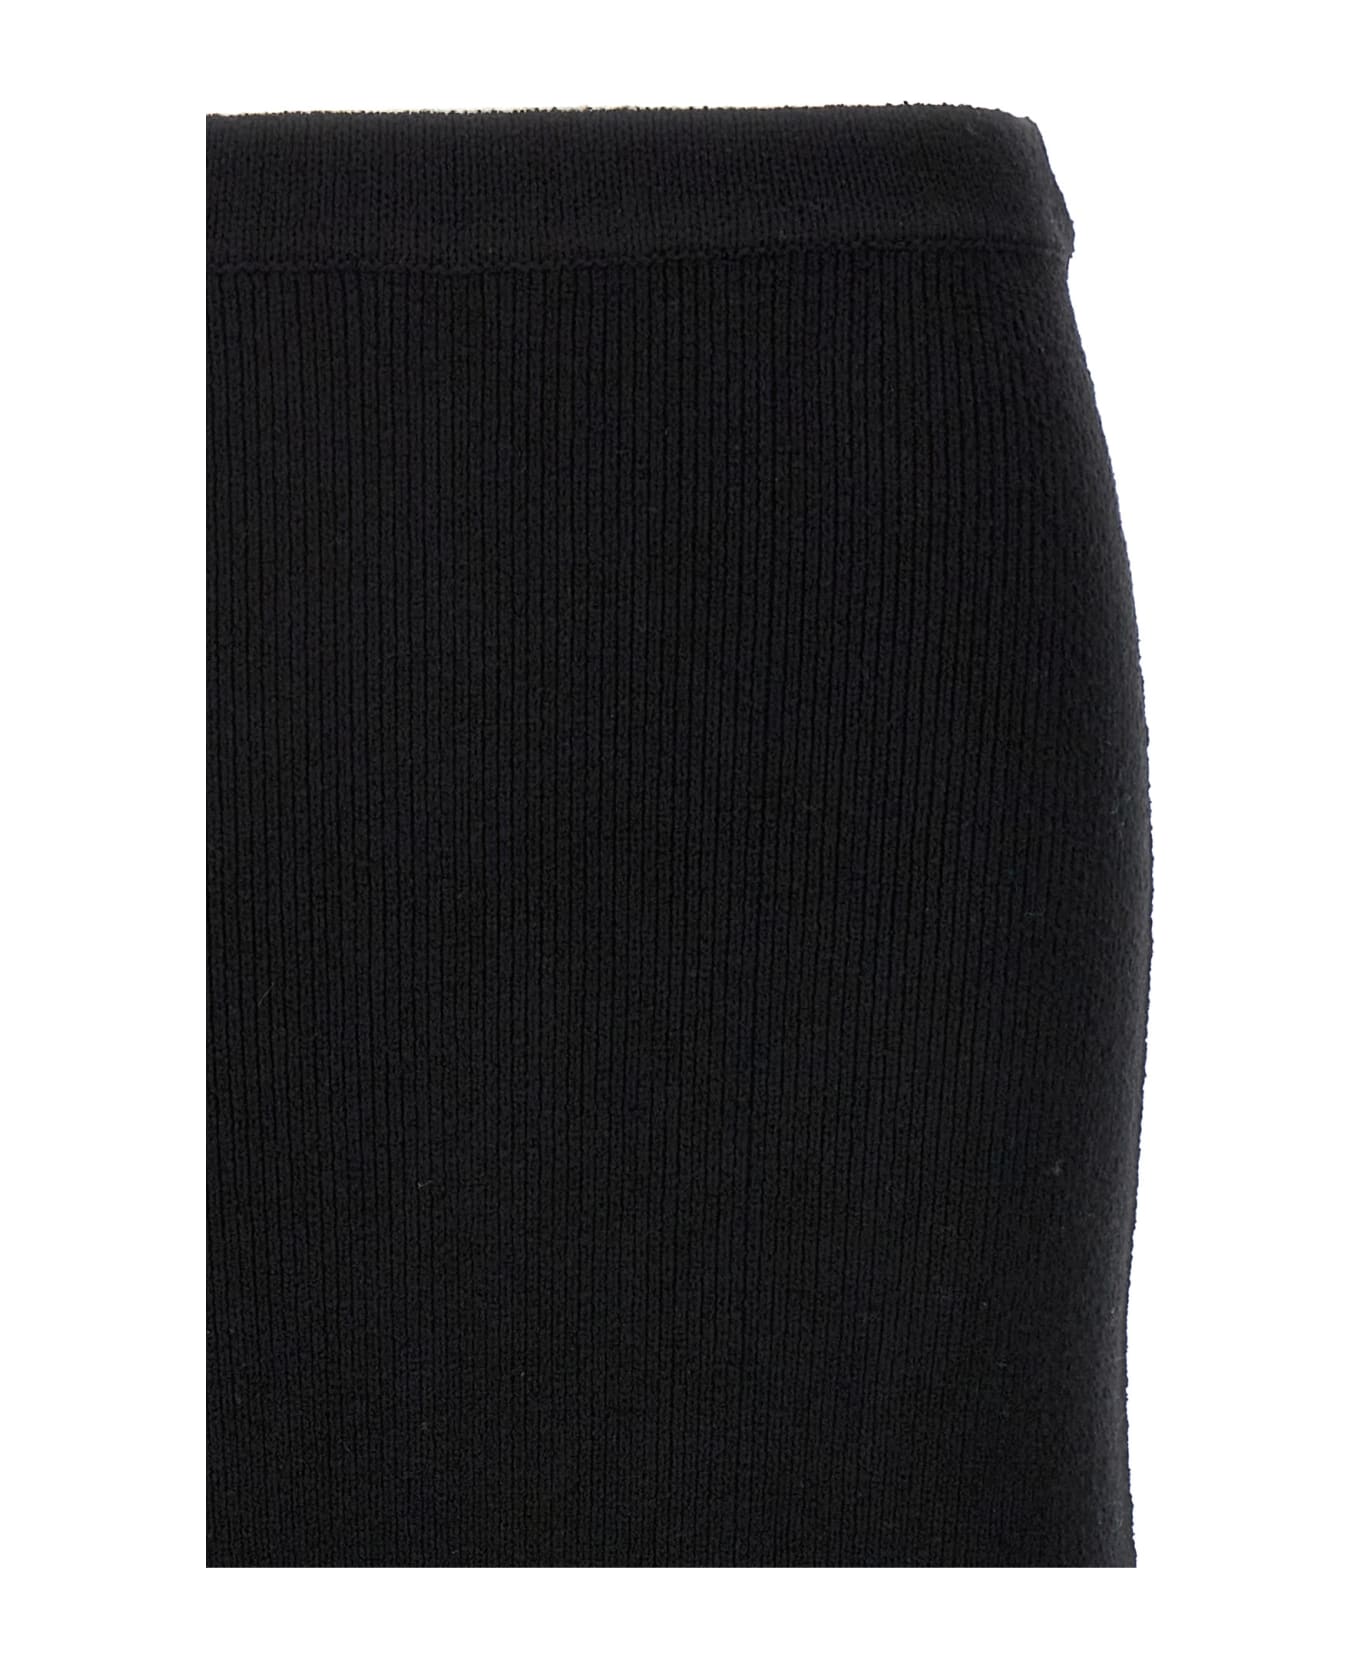 Loulou Studio 'aalis' Skirt - Black   スカート